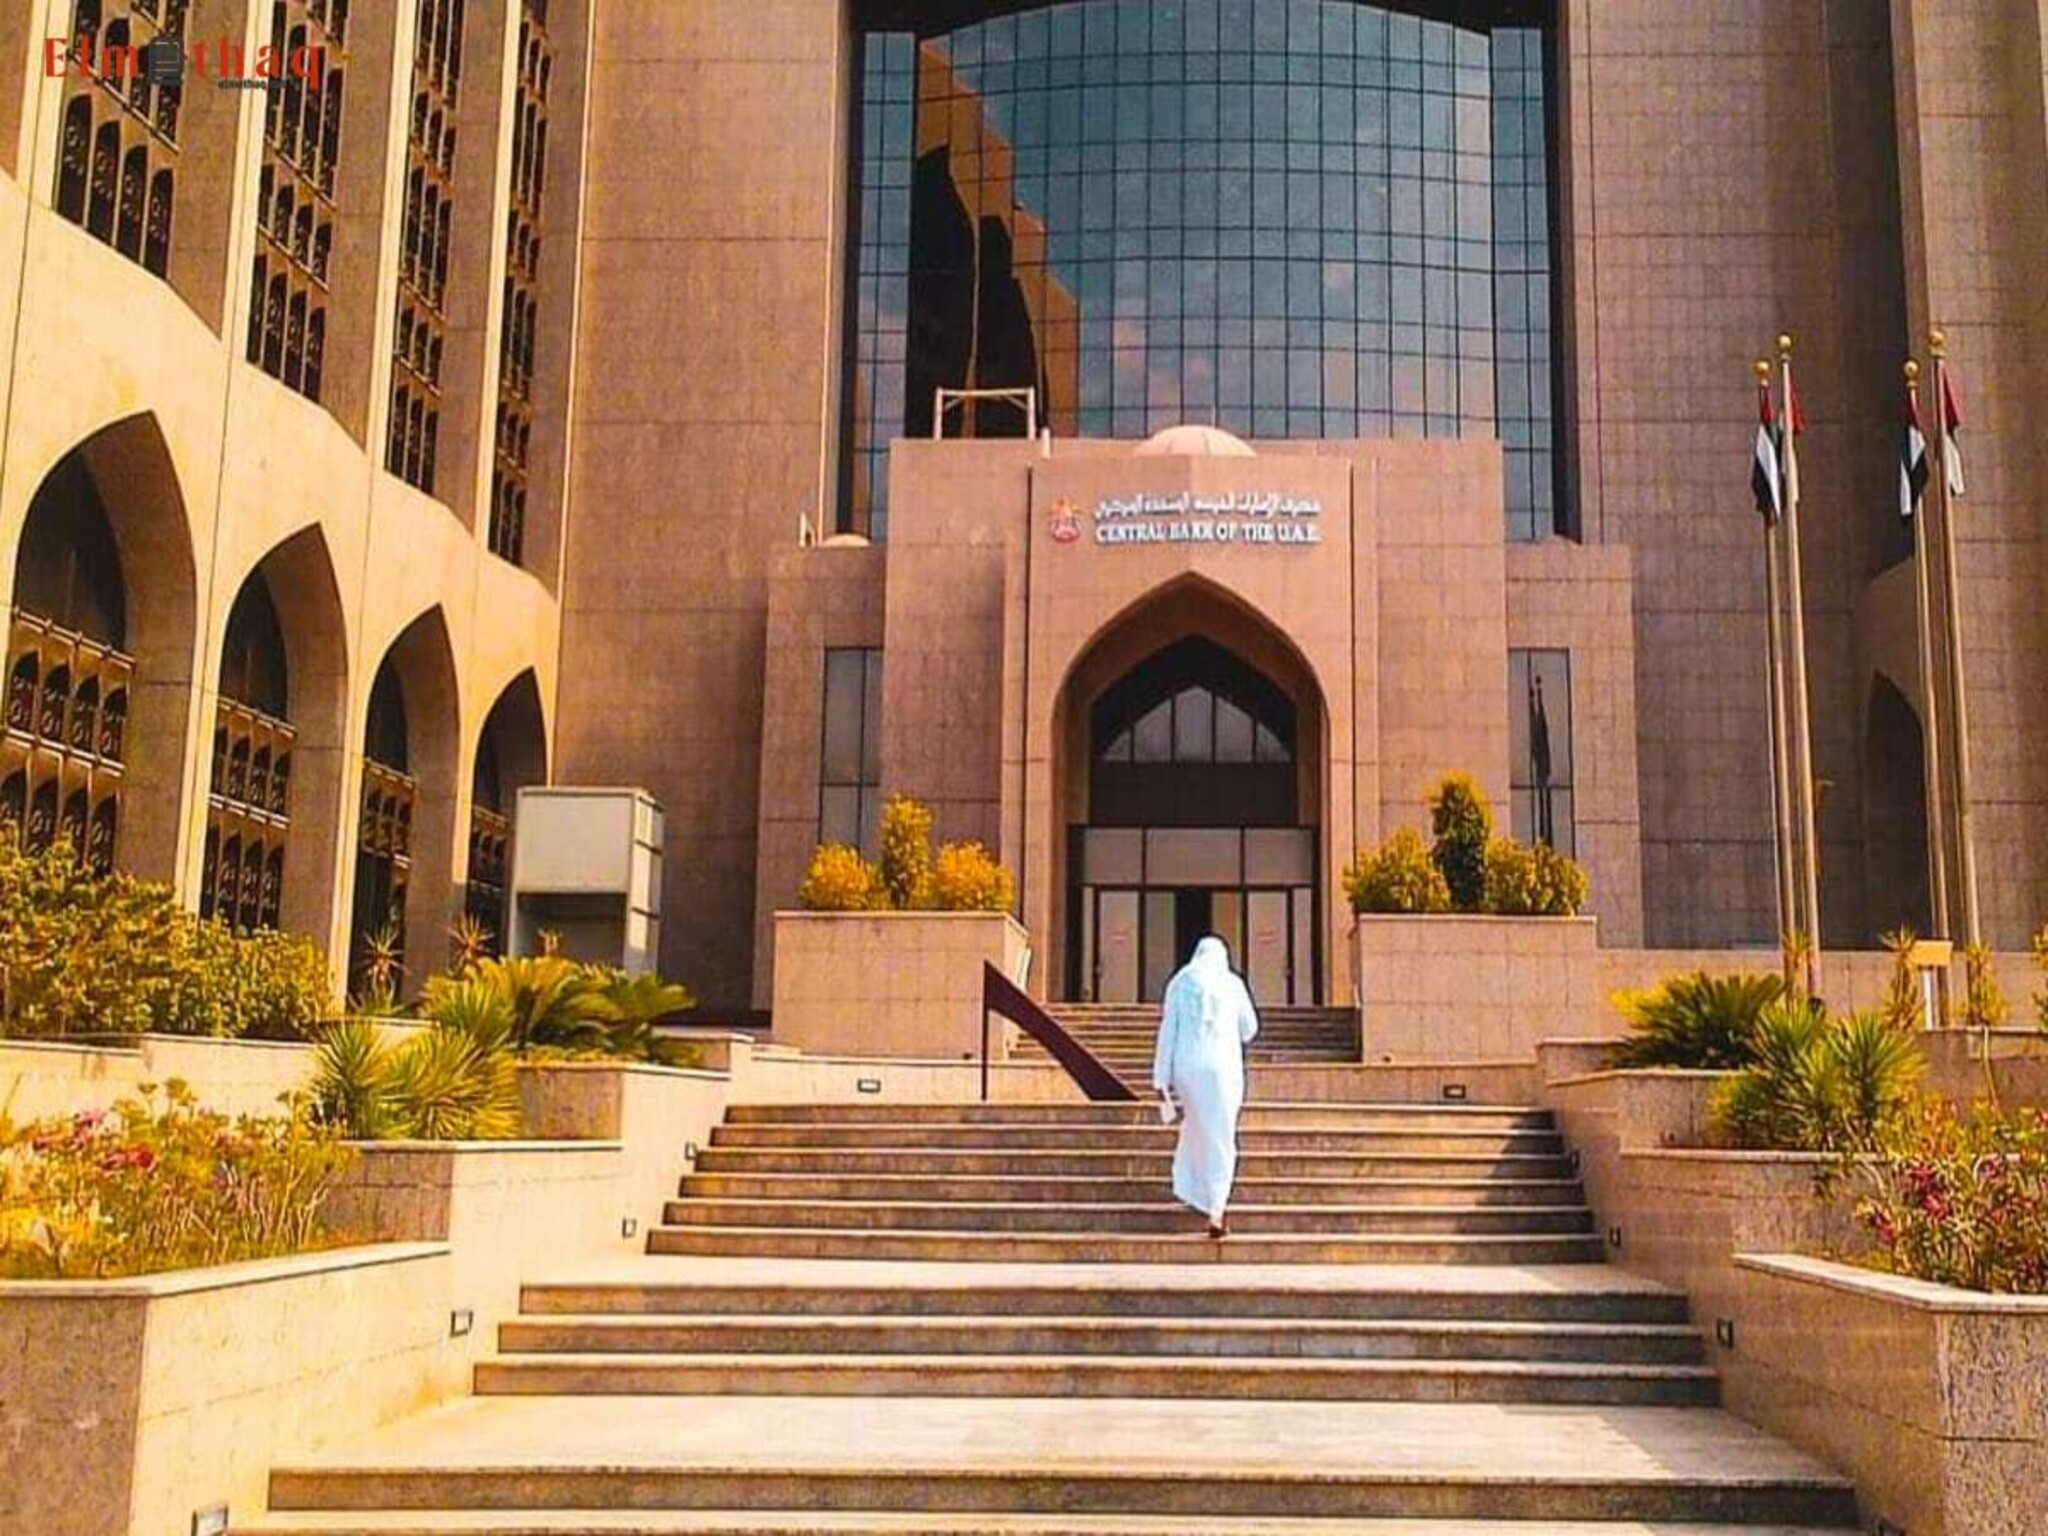 UAE Central Bank launches Digital Dirham to revolutionize financial landscape